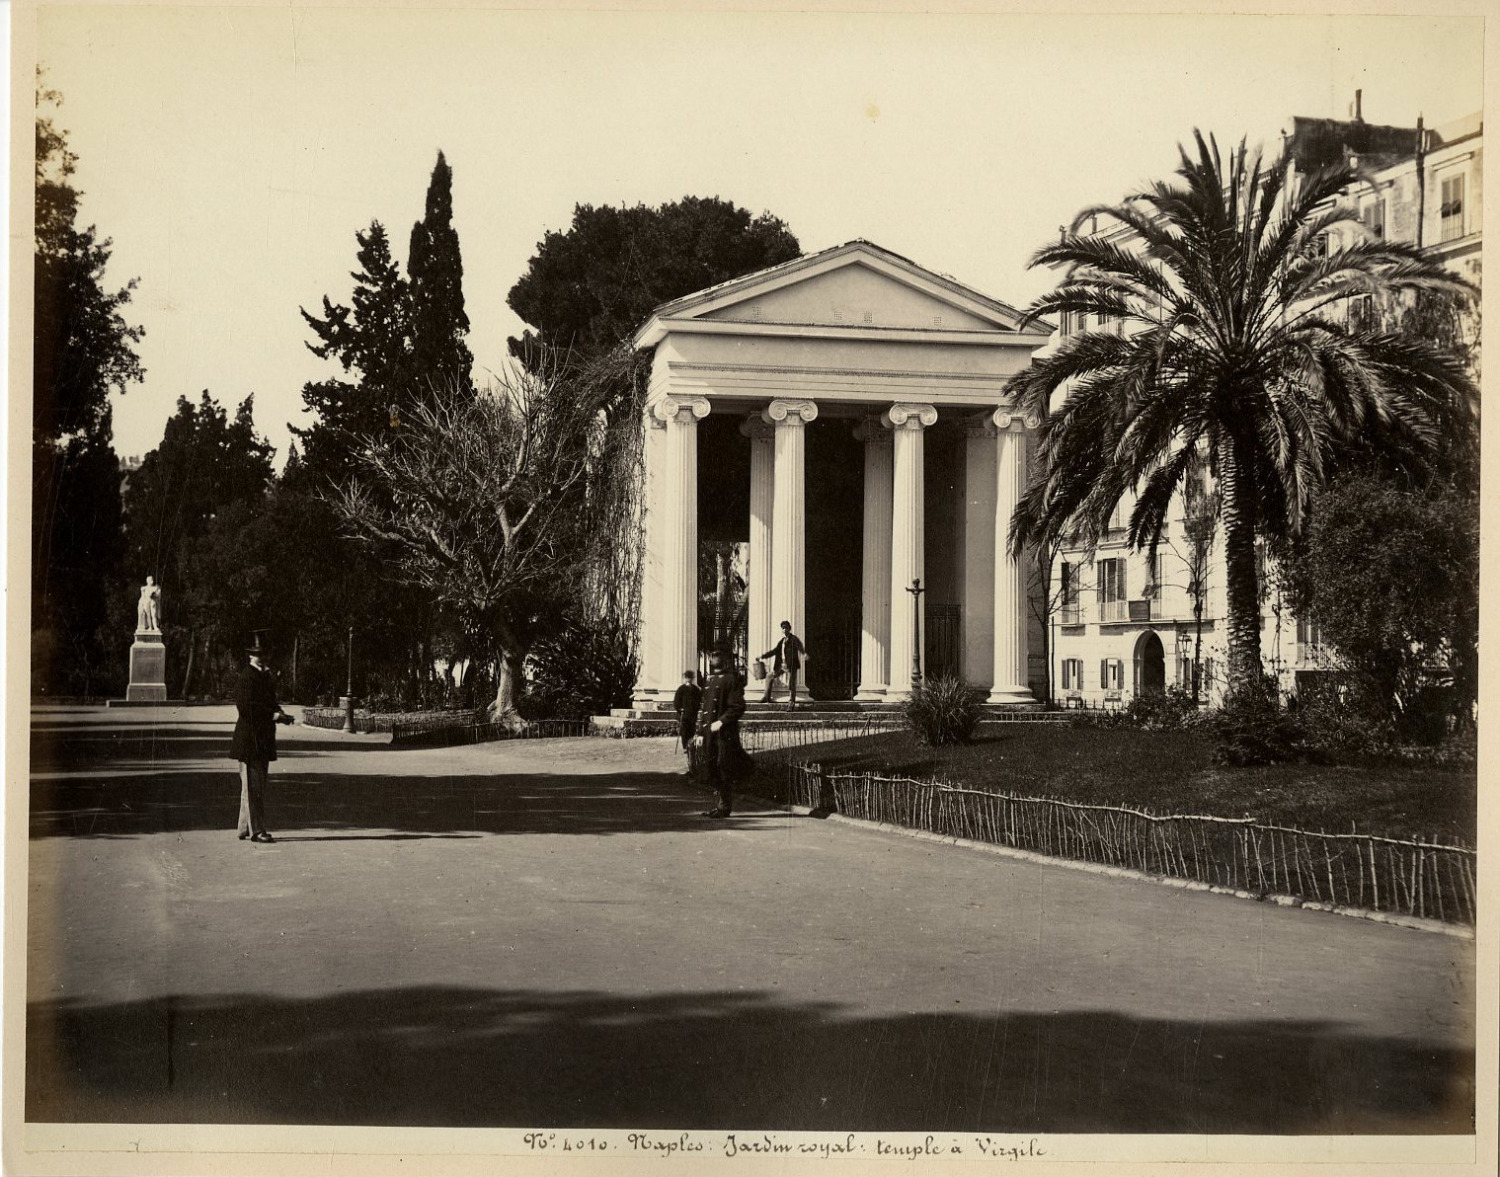 Italy, Naples, Royal Garden, Temple of Virgil Vintage Albumen Print.  Print